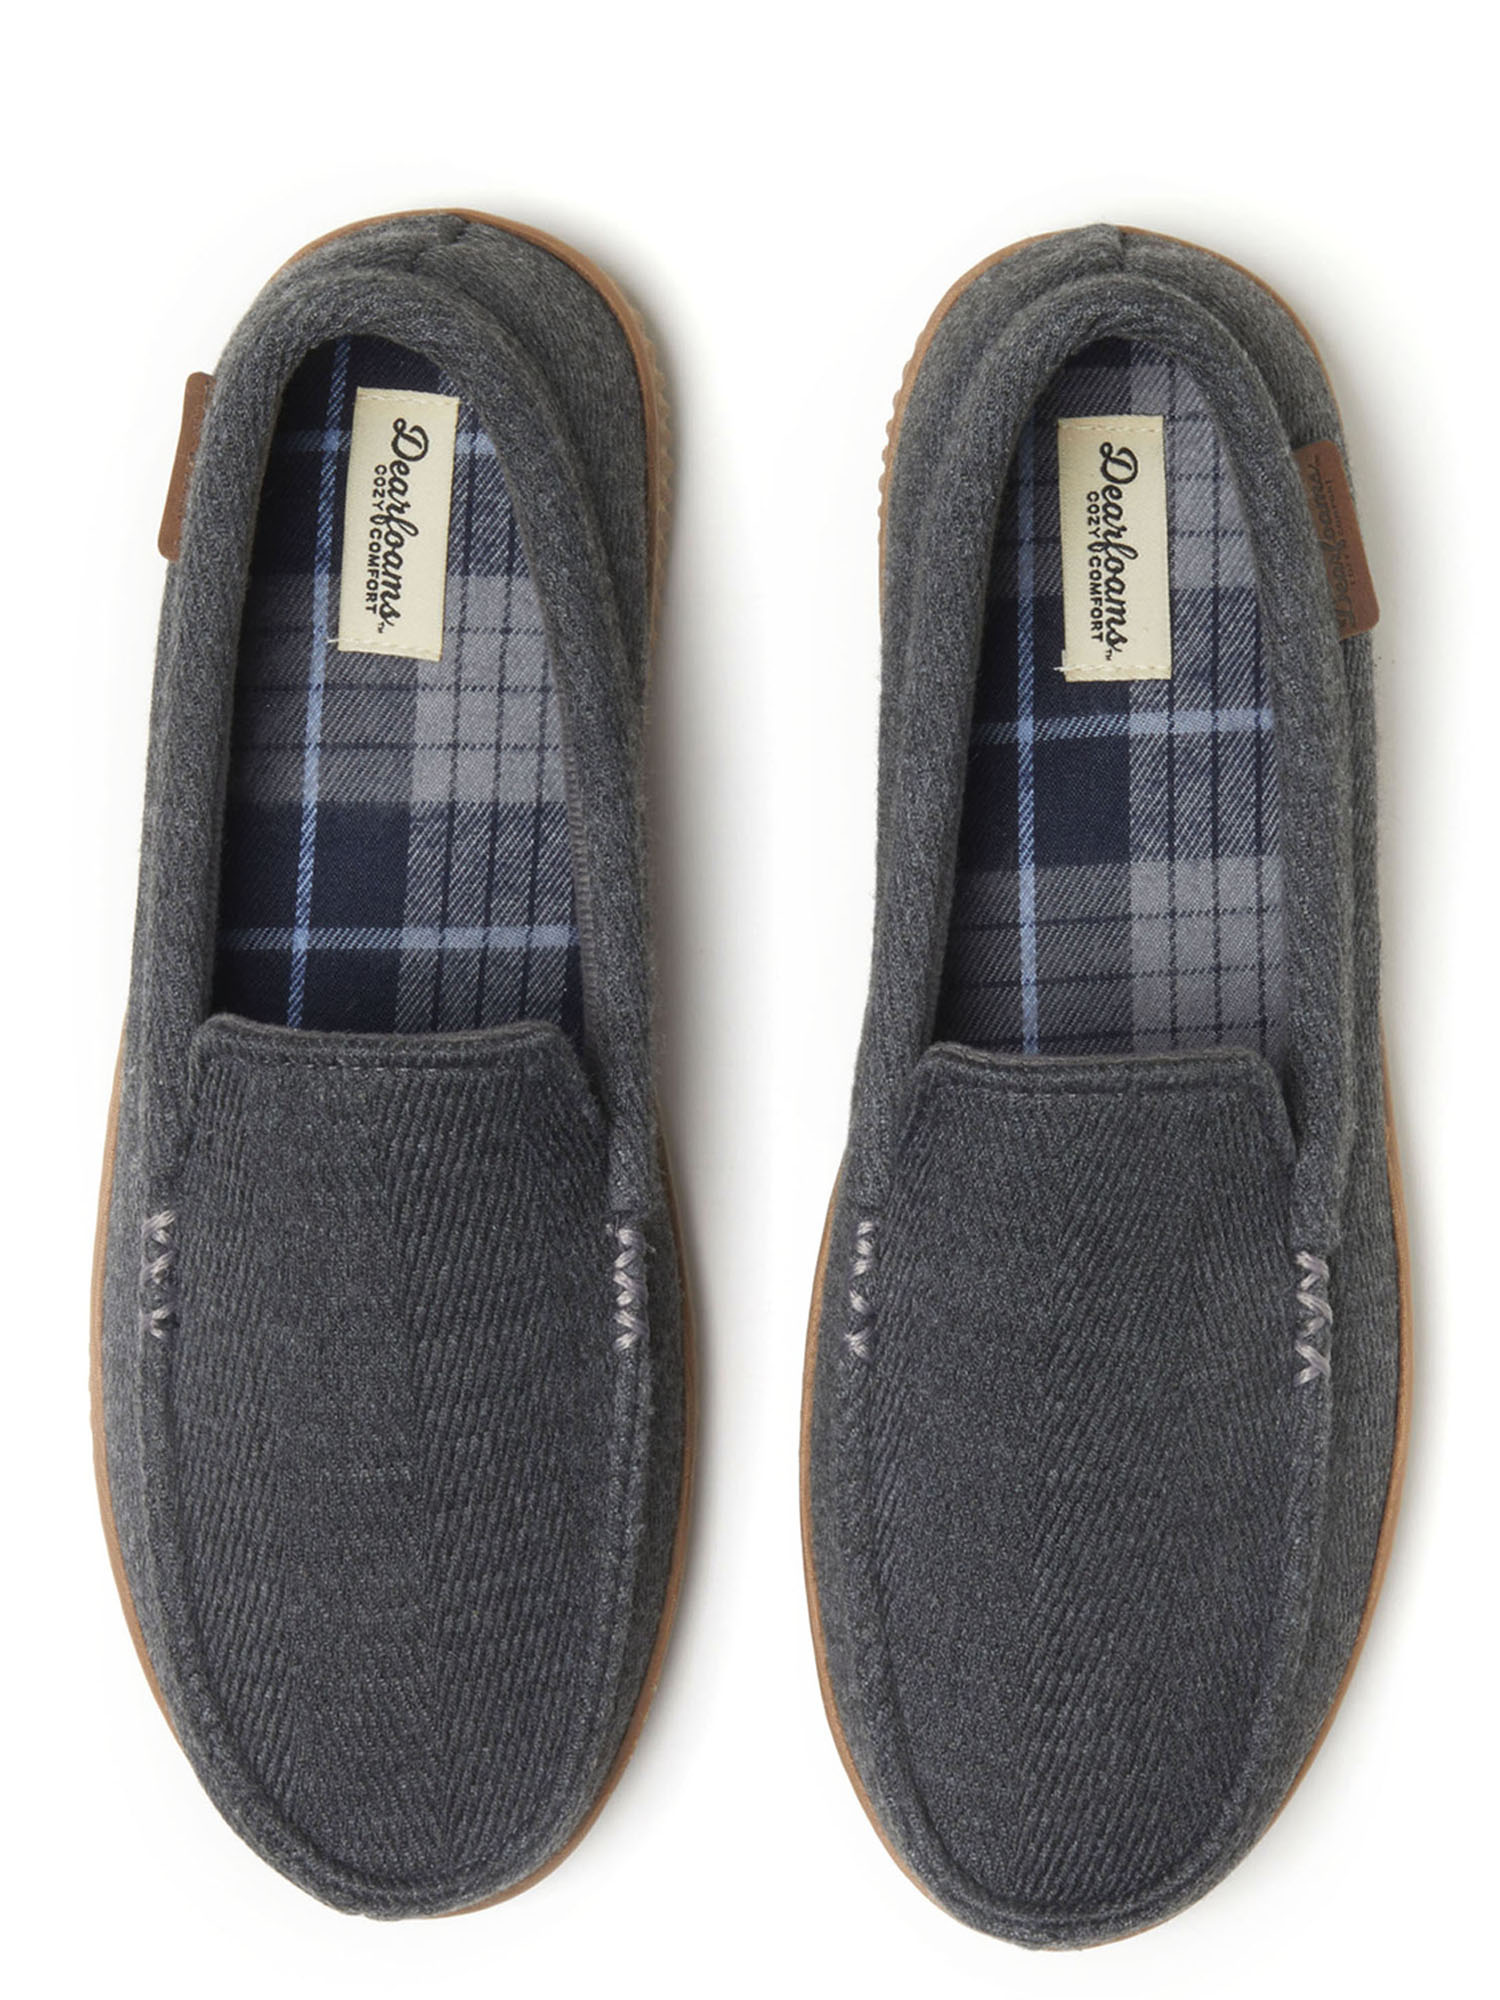 Dearfoams Cozy Comfort Men's Herringbone Moccasin Slippers - image 5 of 5